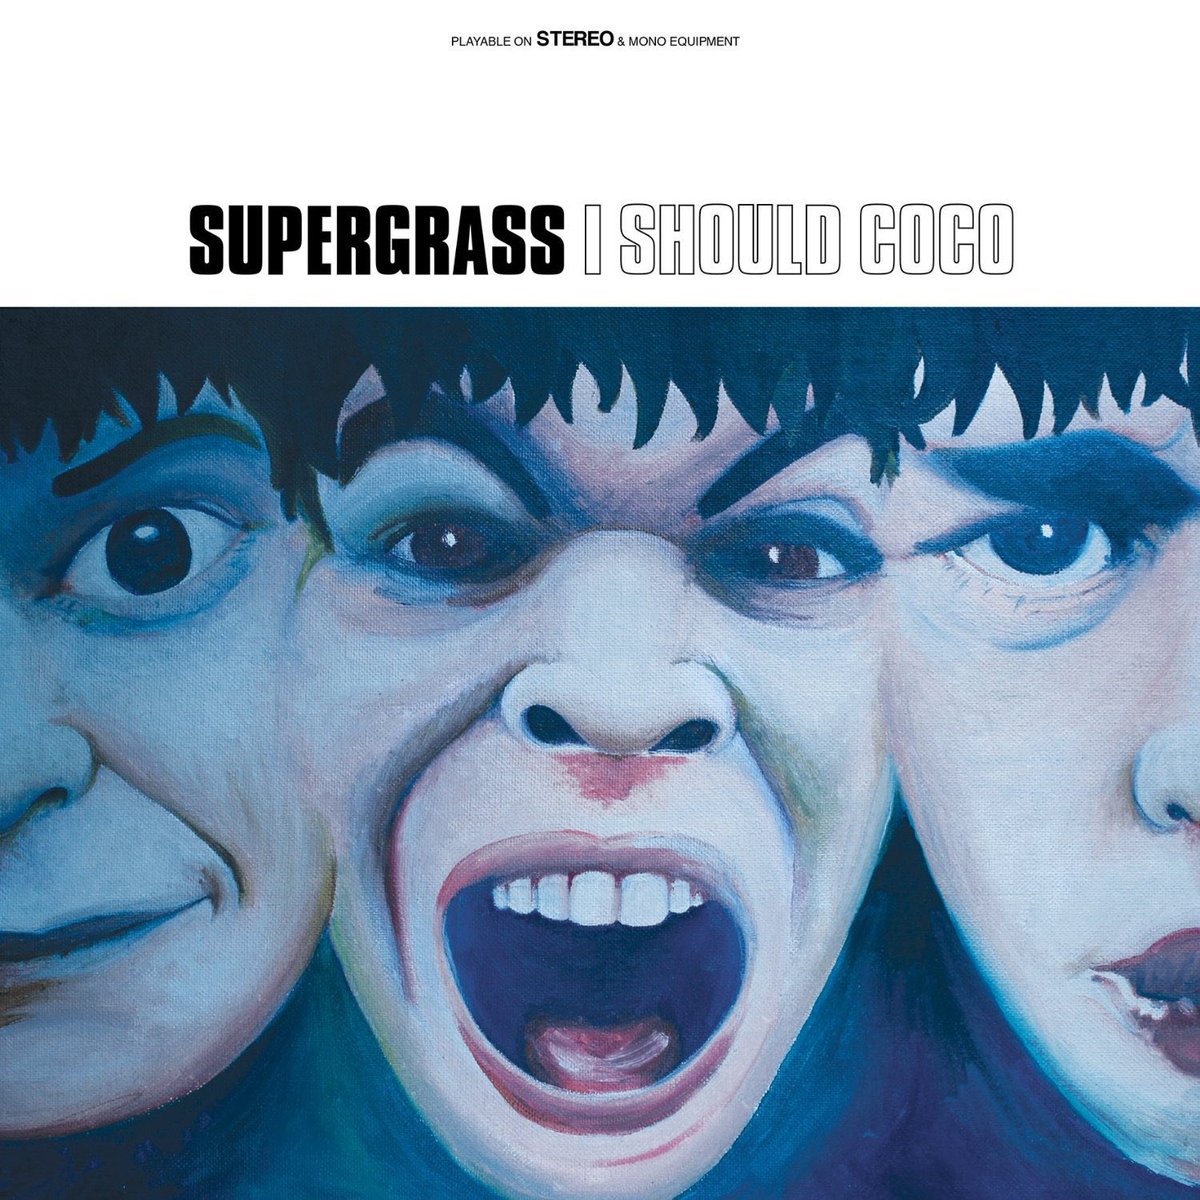 15.05.1995 r. - ukazał się debiutancki album studyjny zespołu Supergrass - I Should Coco.
#Supergrass #rock #punkrock #britpop #alternativerock #poppunk